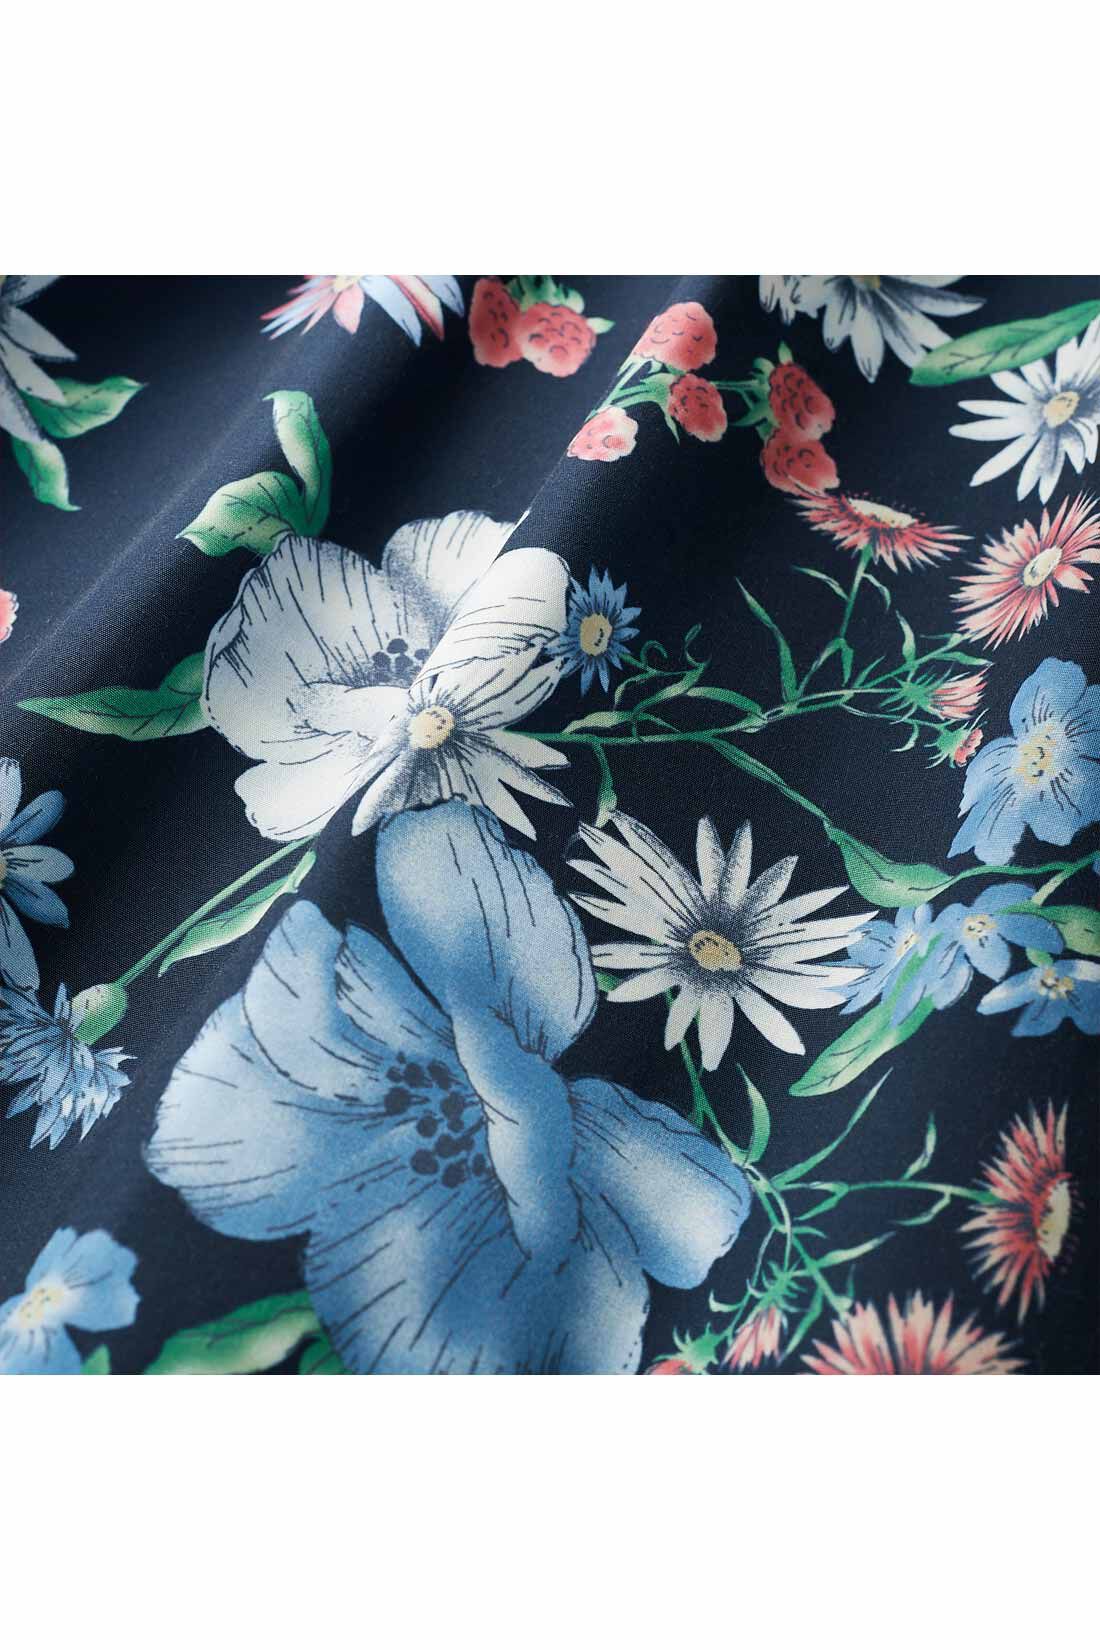 IEDIT[イディット] 華やか柄でコーディネイトが着映えする花柄フレアースカート〈グレー〉|ほどよいハリ感のある高密度なきれいめ素材。